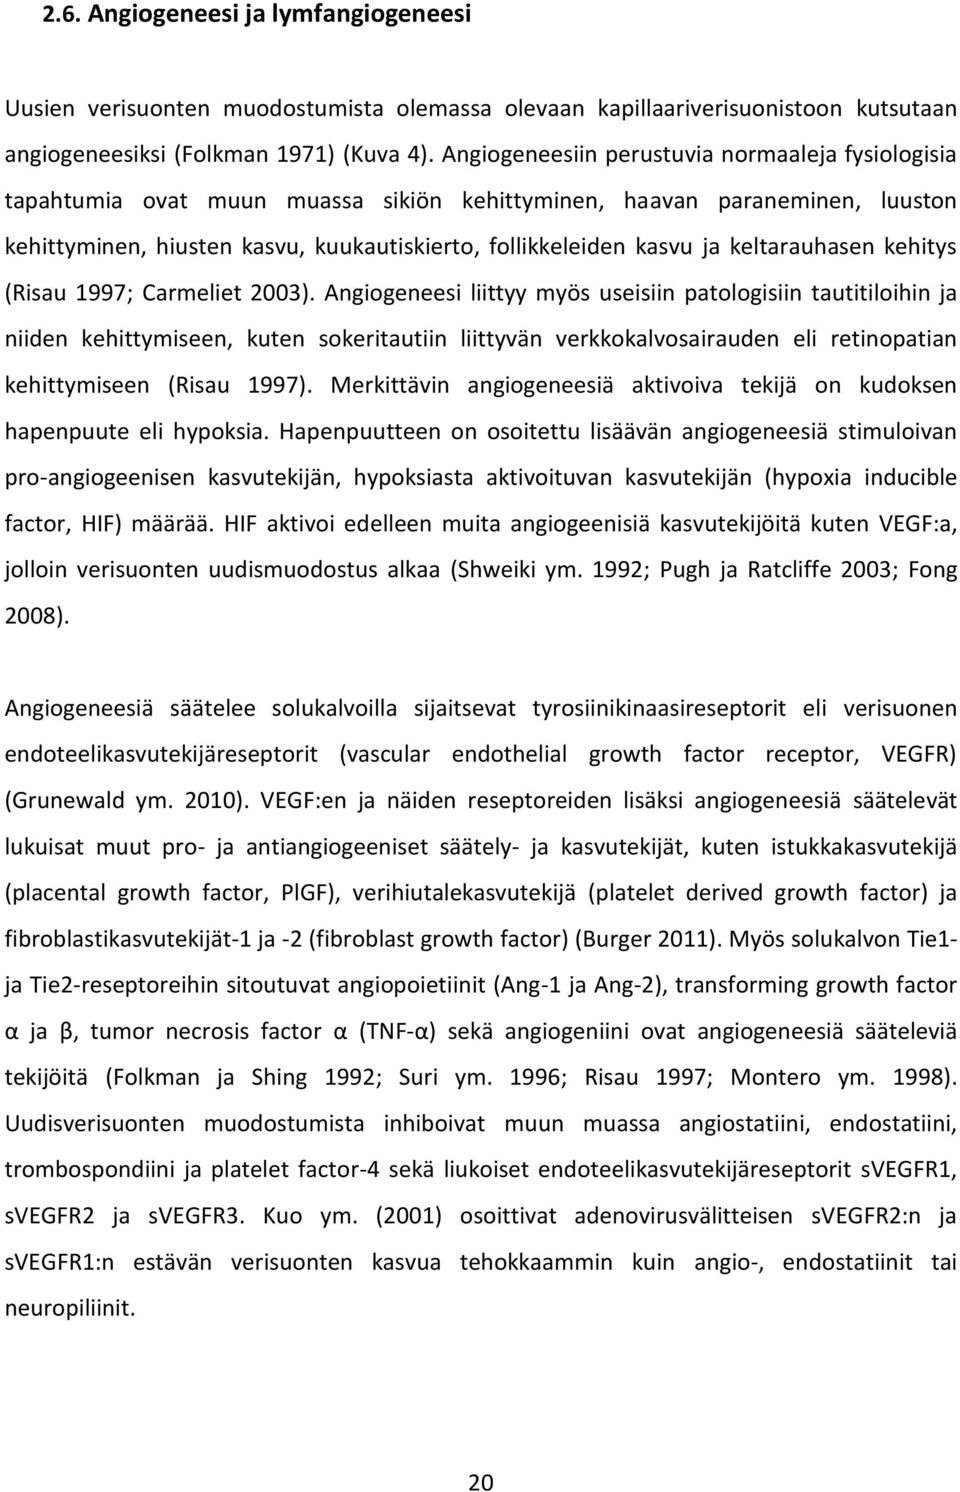 keltarauhasen kehitys (Risau 1997; Carmeliet 2003).